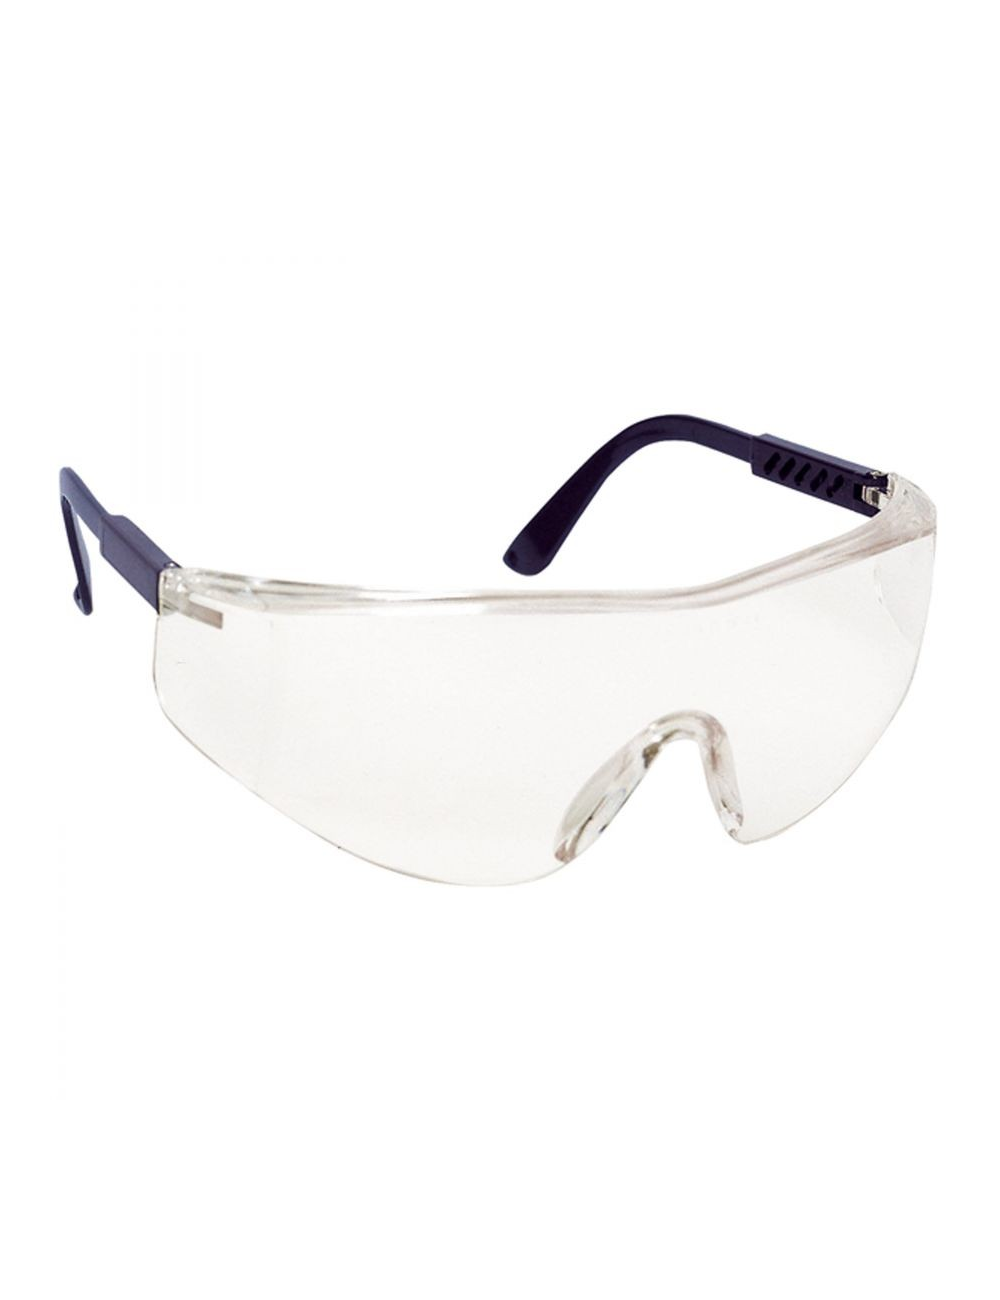 lunettes de protection SABLUX branches bleues occulaires inc